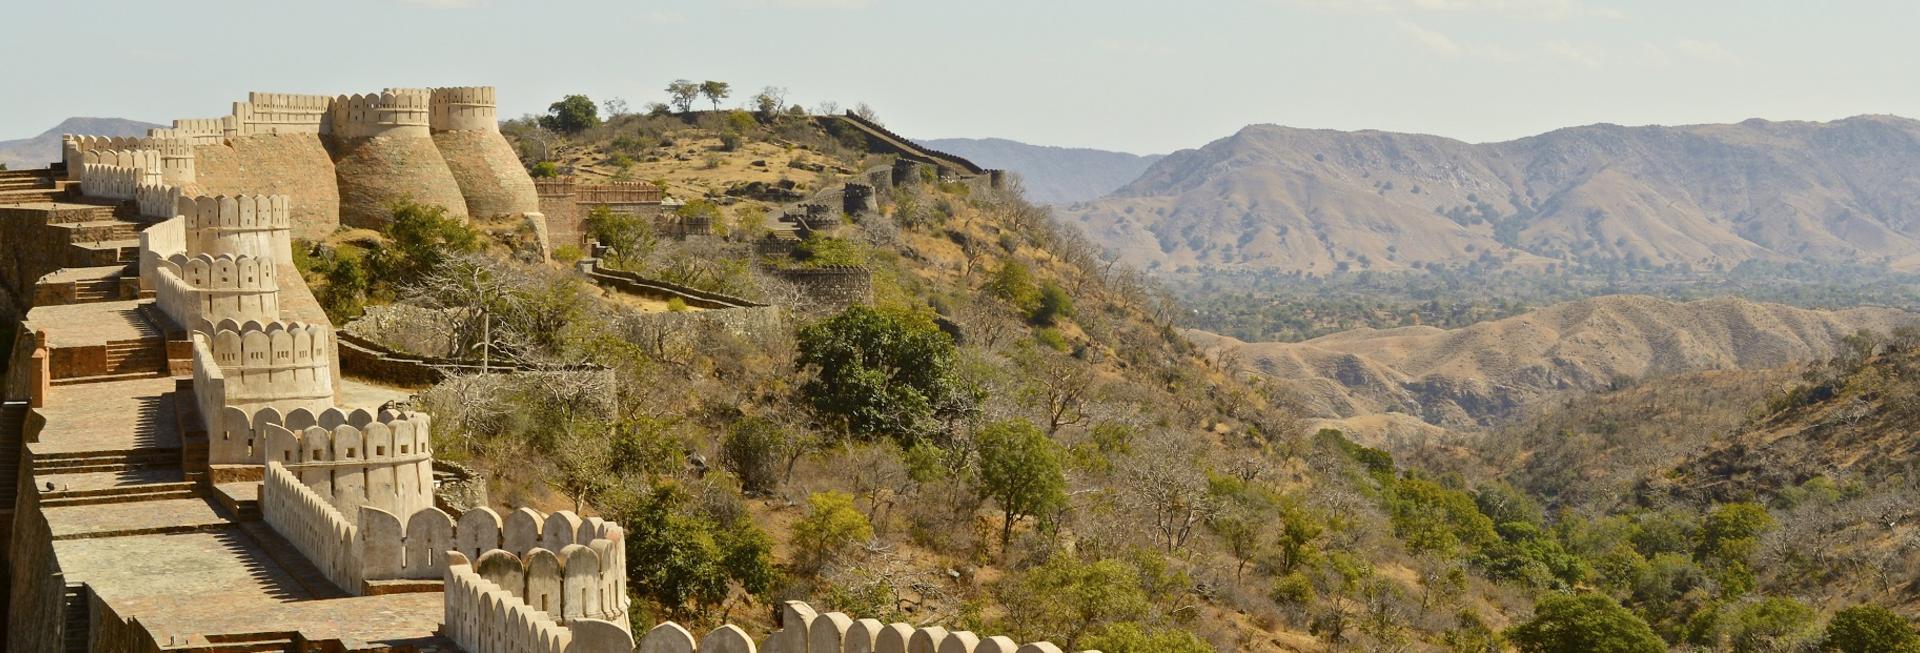 Kumbhalgarh Walls, Rajasthan